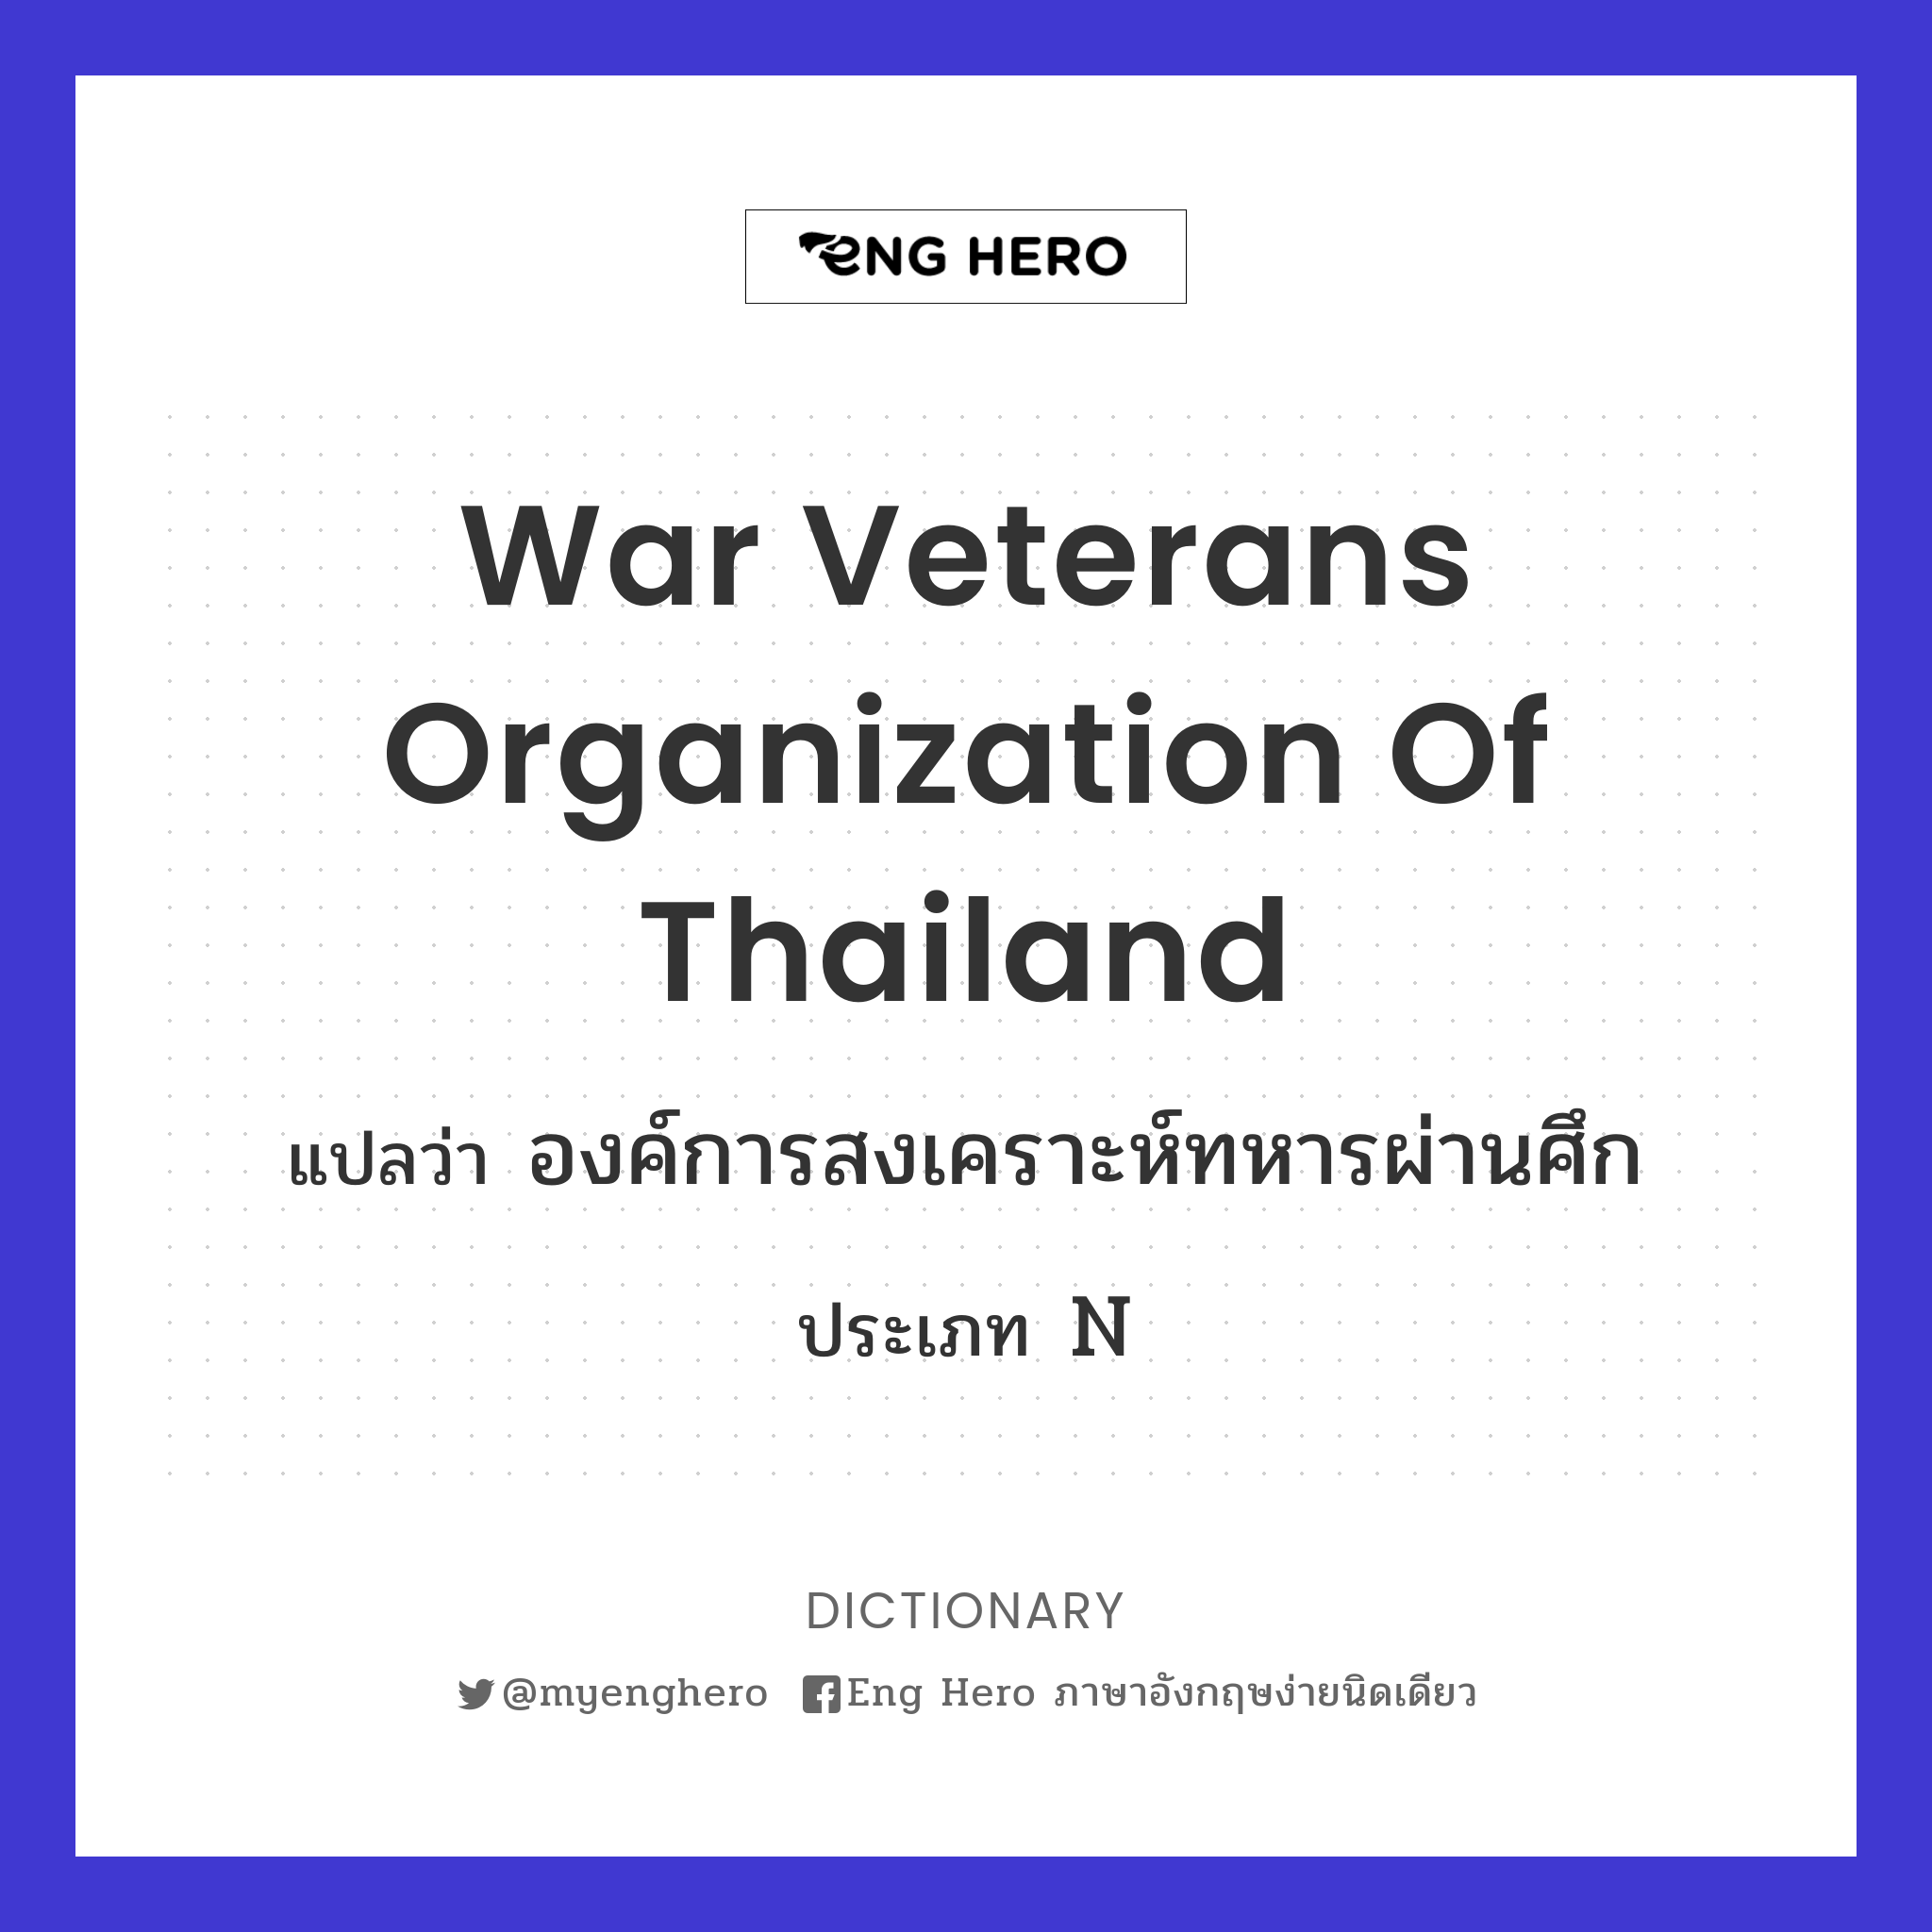 War Veterans Organization of Thailand